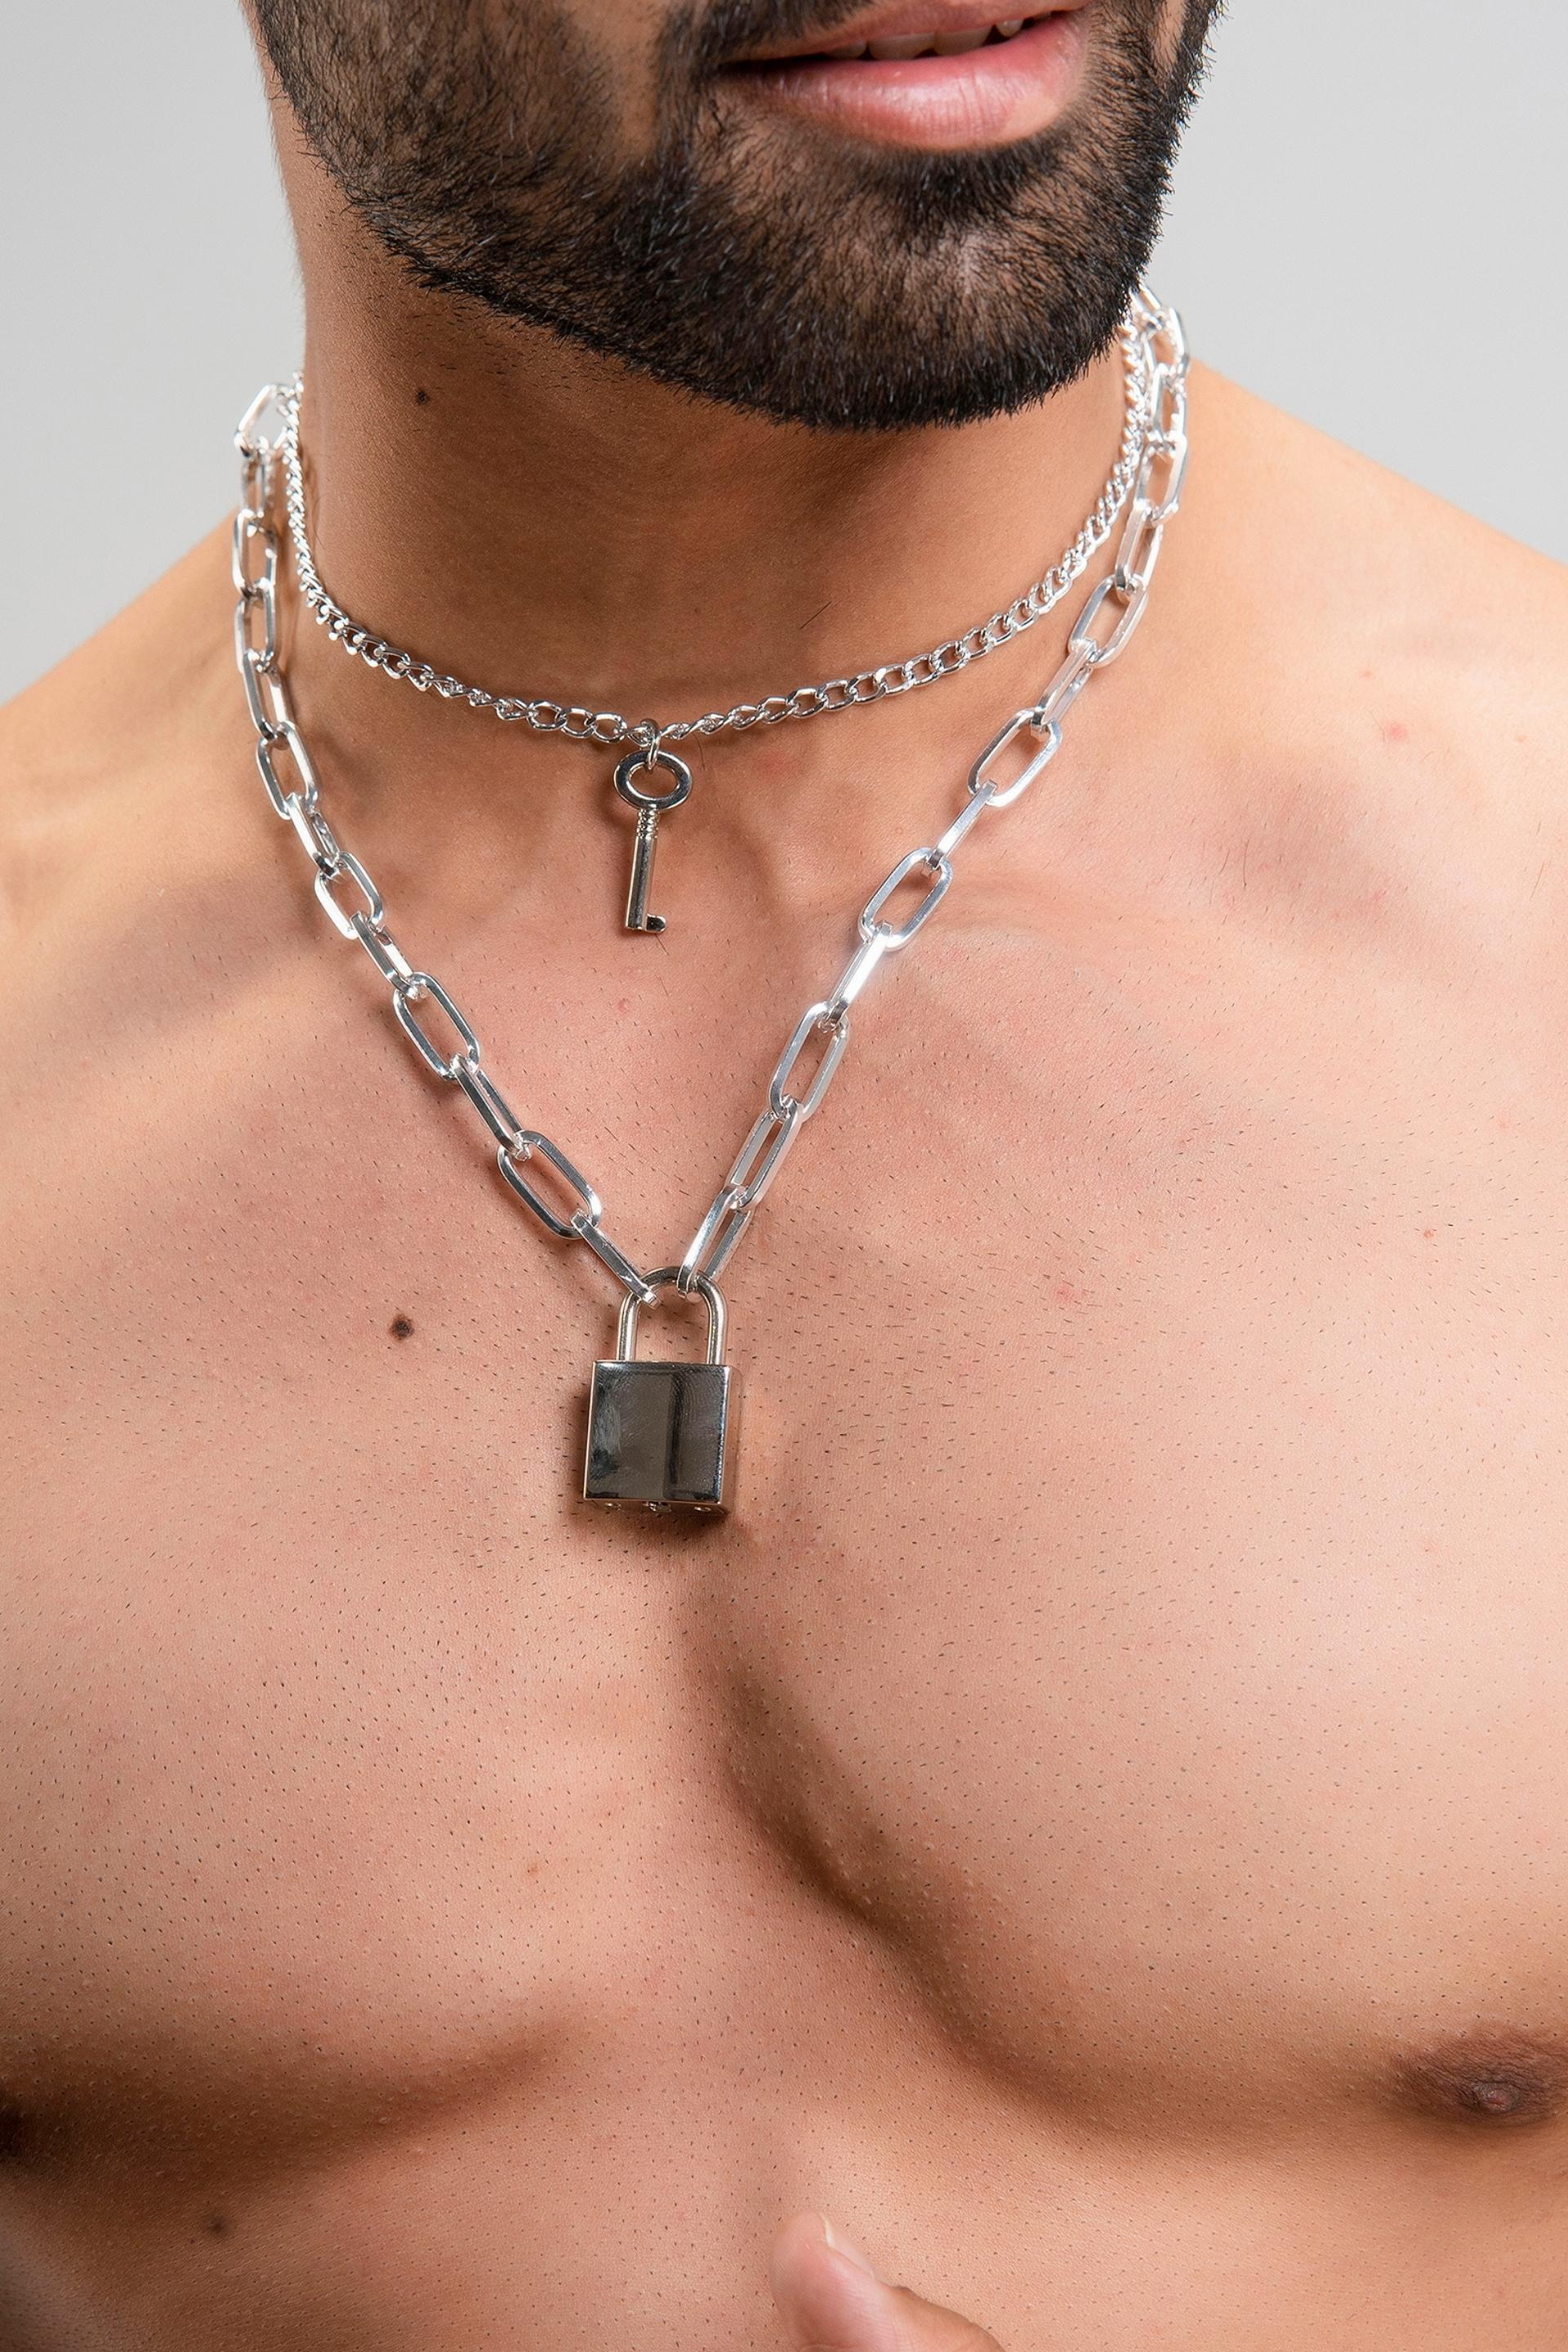 Firangi Yarn Alloy Lock and Key 2 layer Jewelery For Men